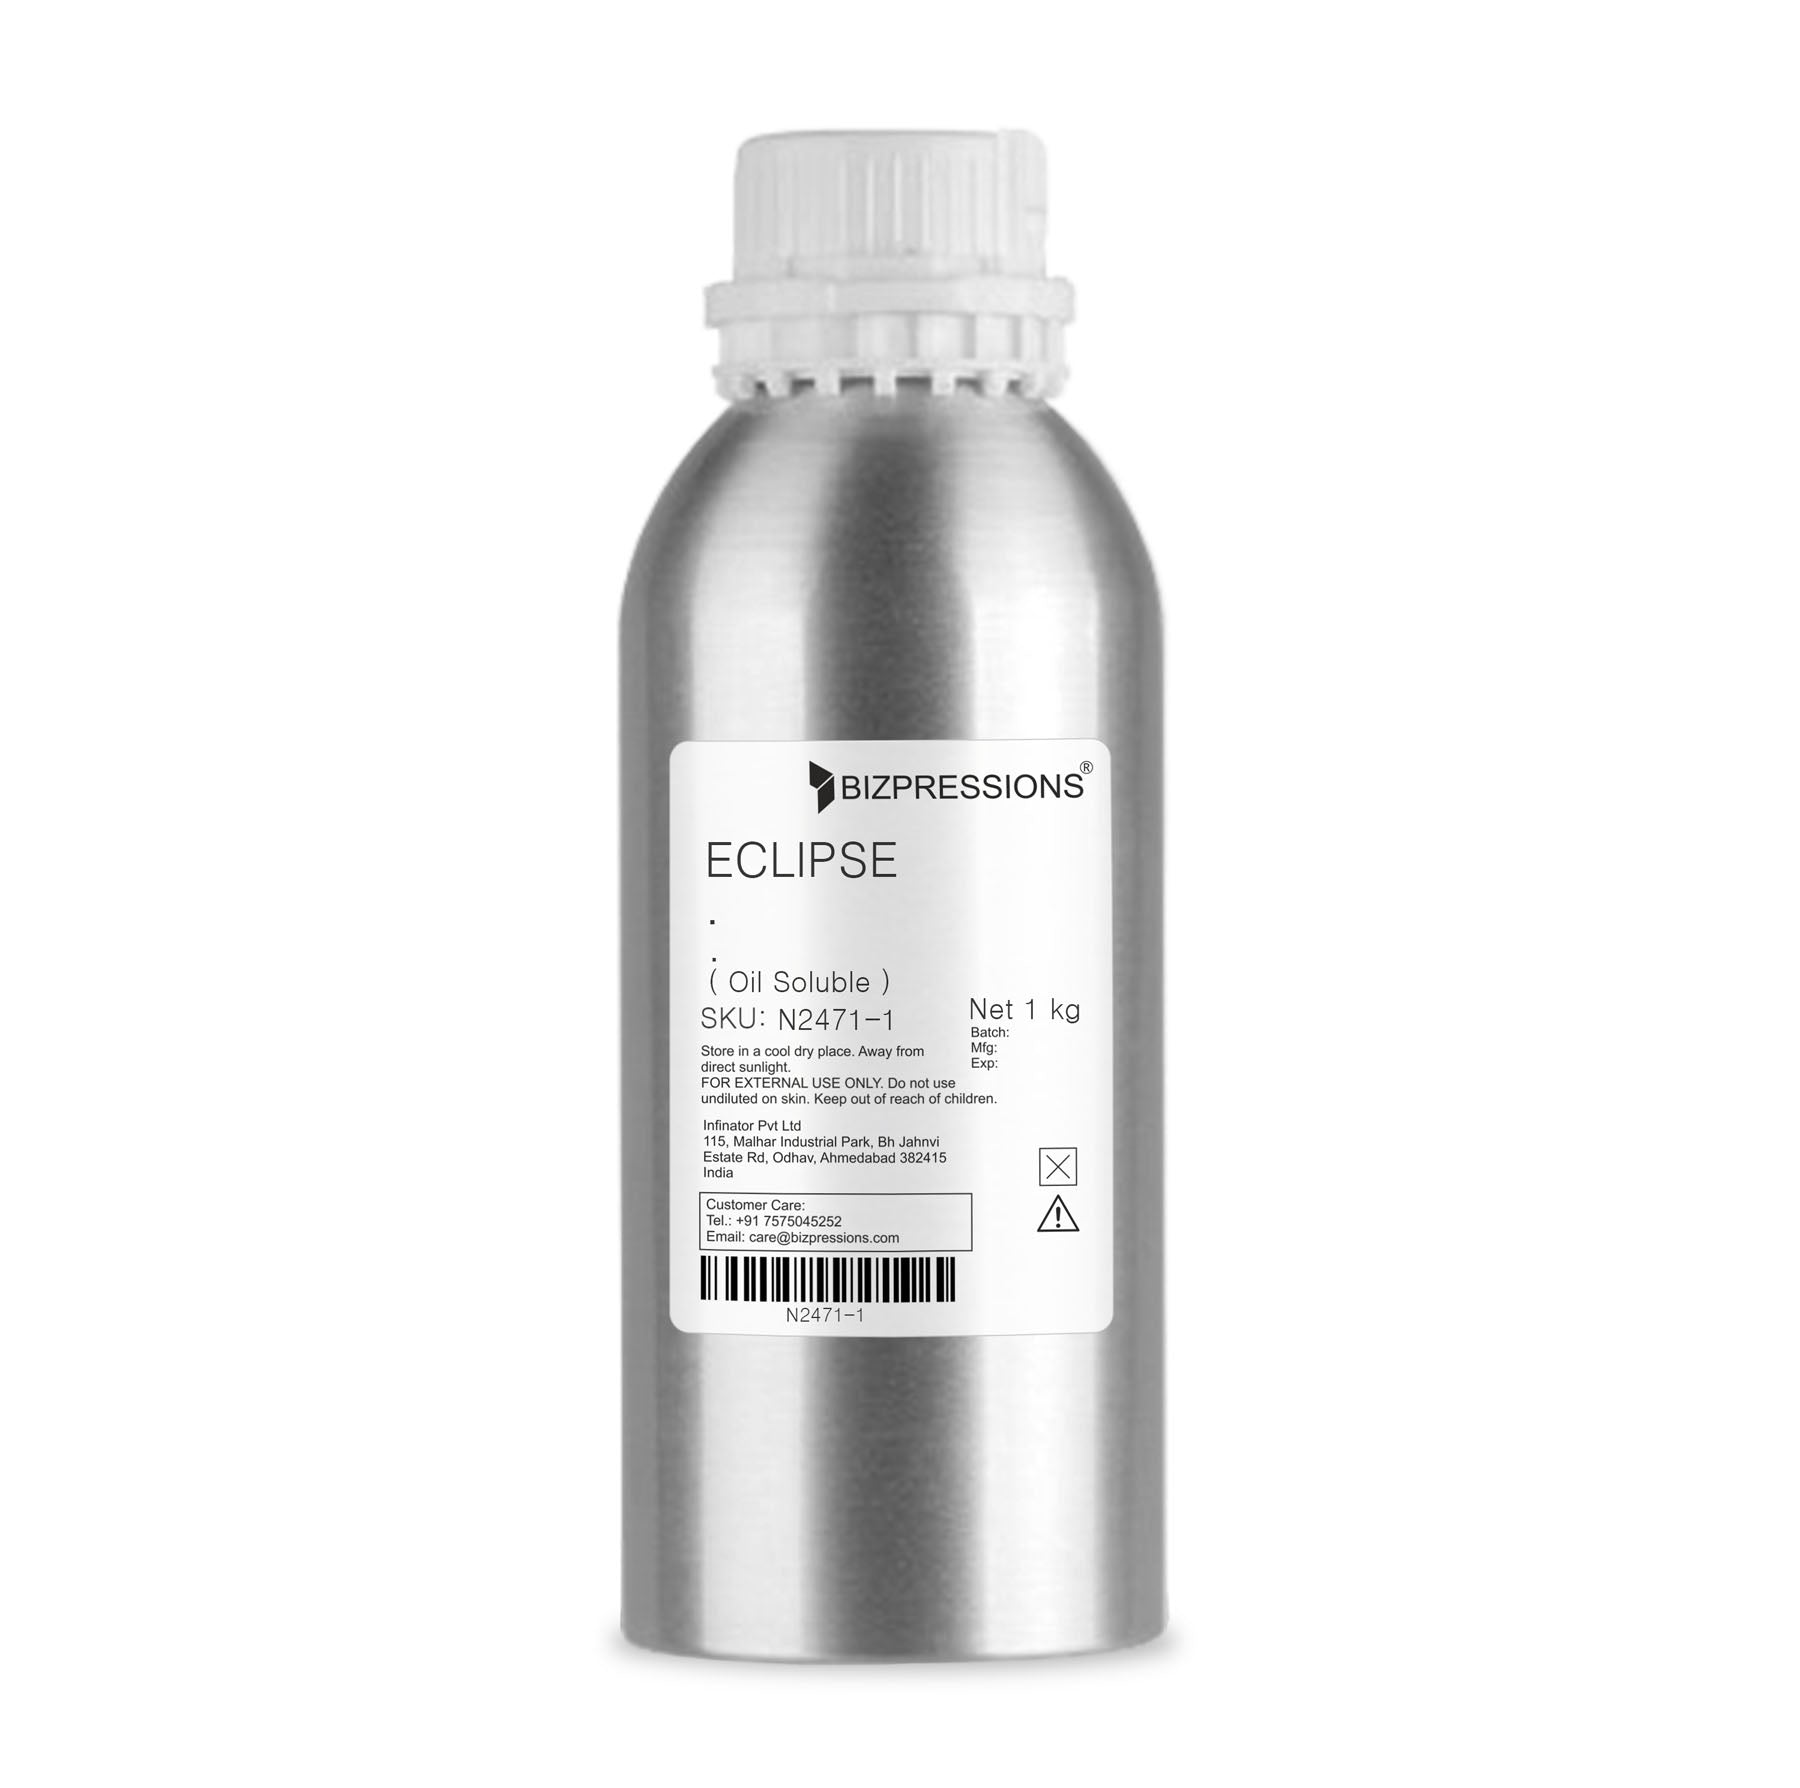 ECLIPSE - Fragrance ( Oil Soluble ) - 1 kg